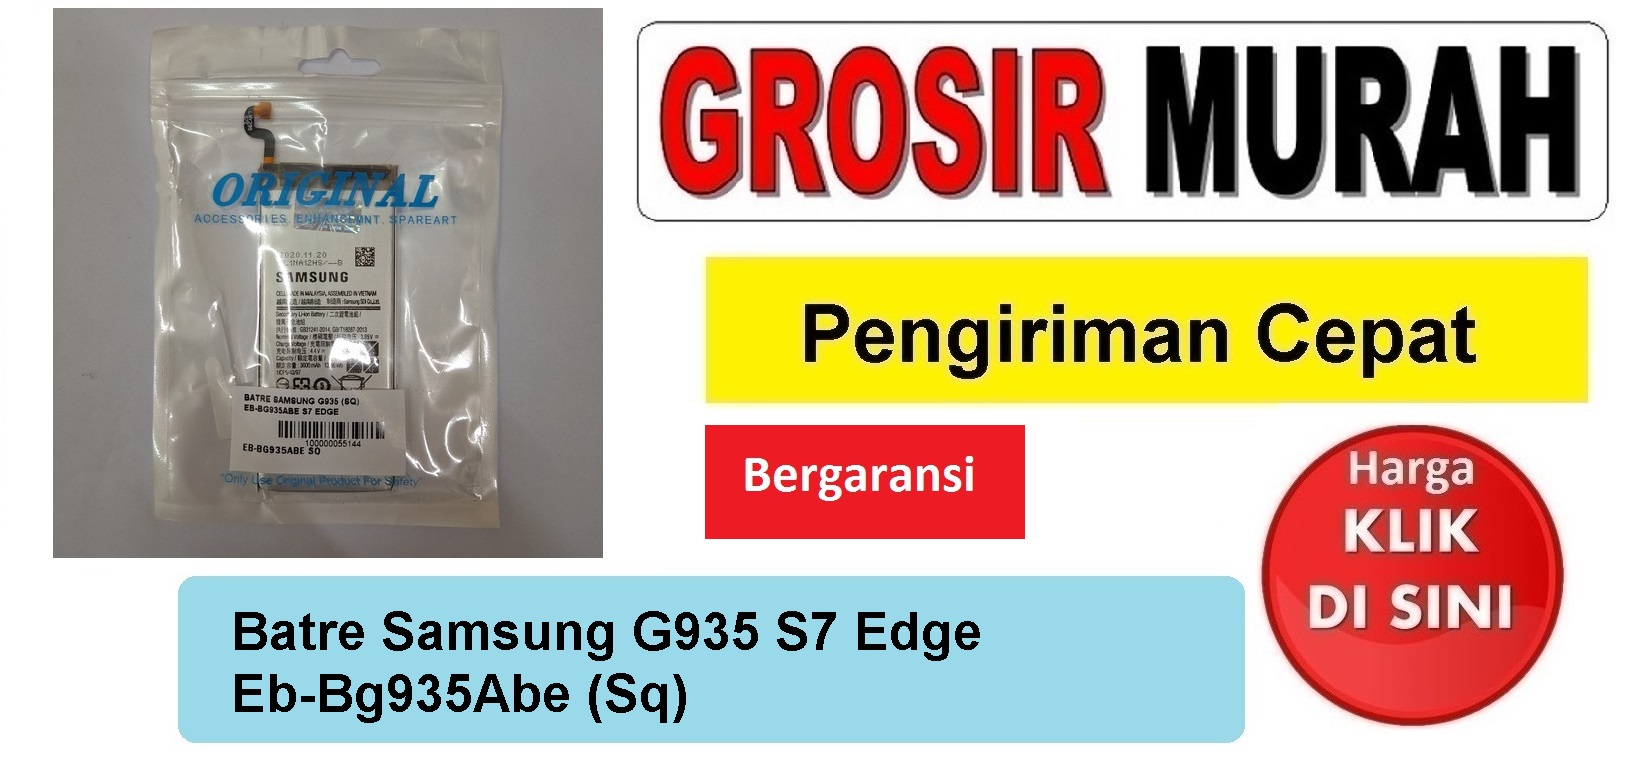 Batre Samsung G935 S7 Edge Eb-Bg935Abe (Sq) Baterai Battery Bergaransi Batere